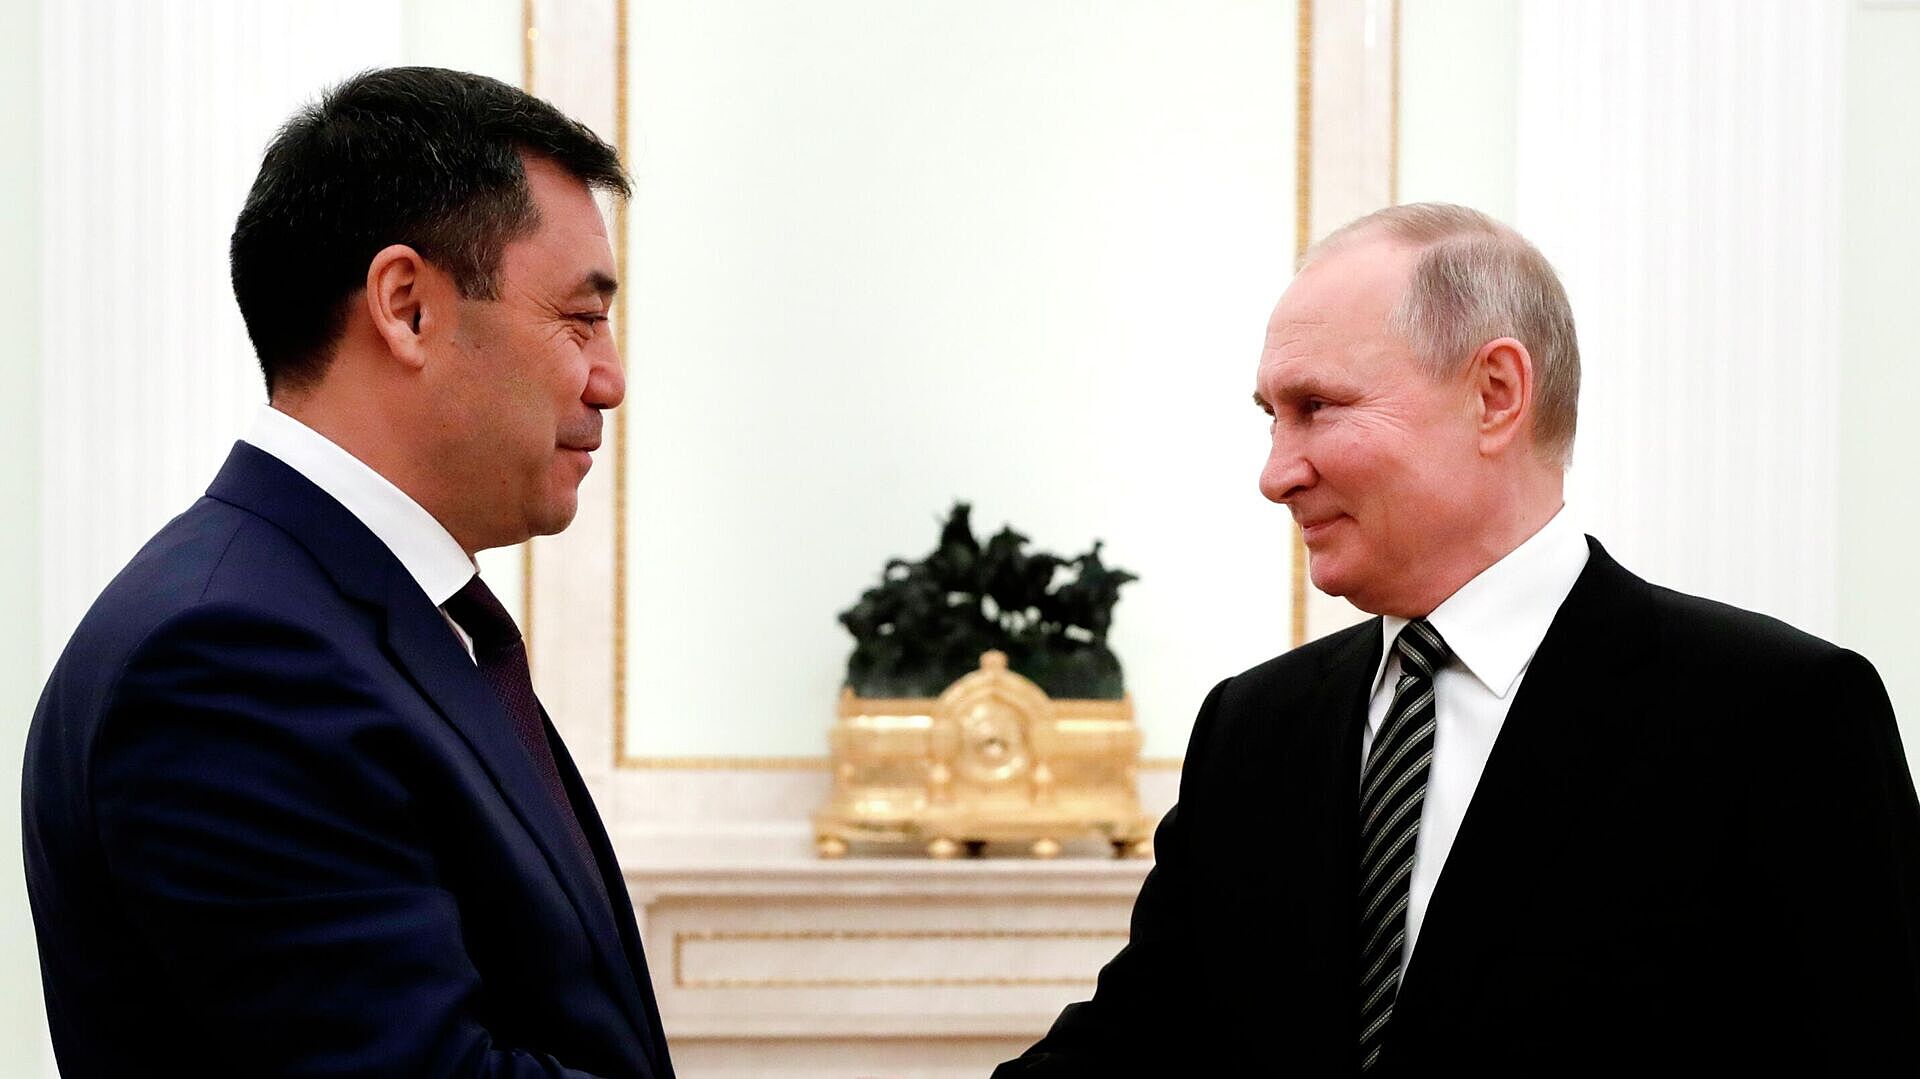 Путин поздравил президента Киргизии с Днем независимости республики